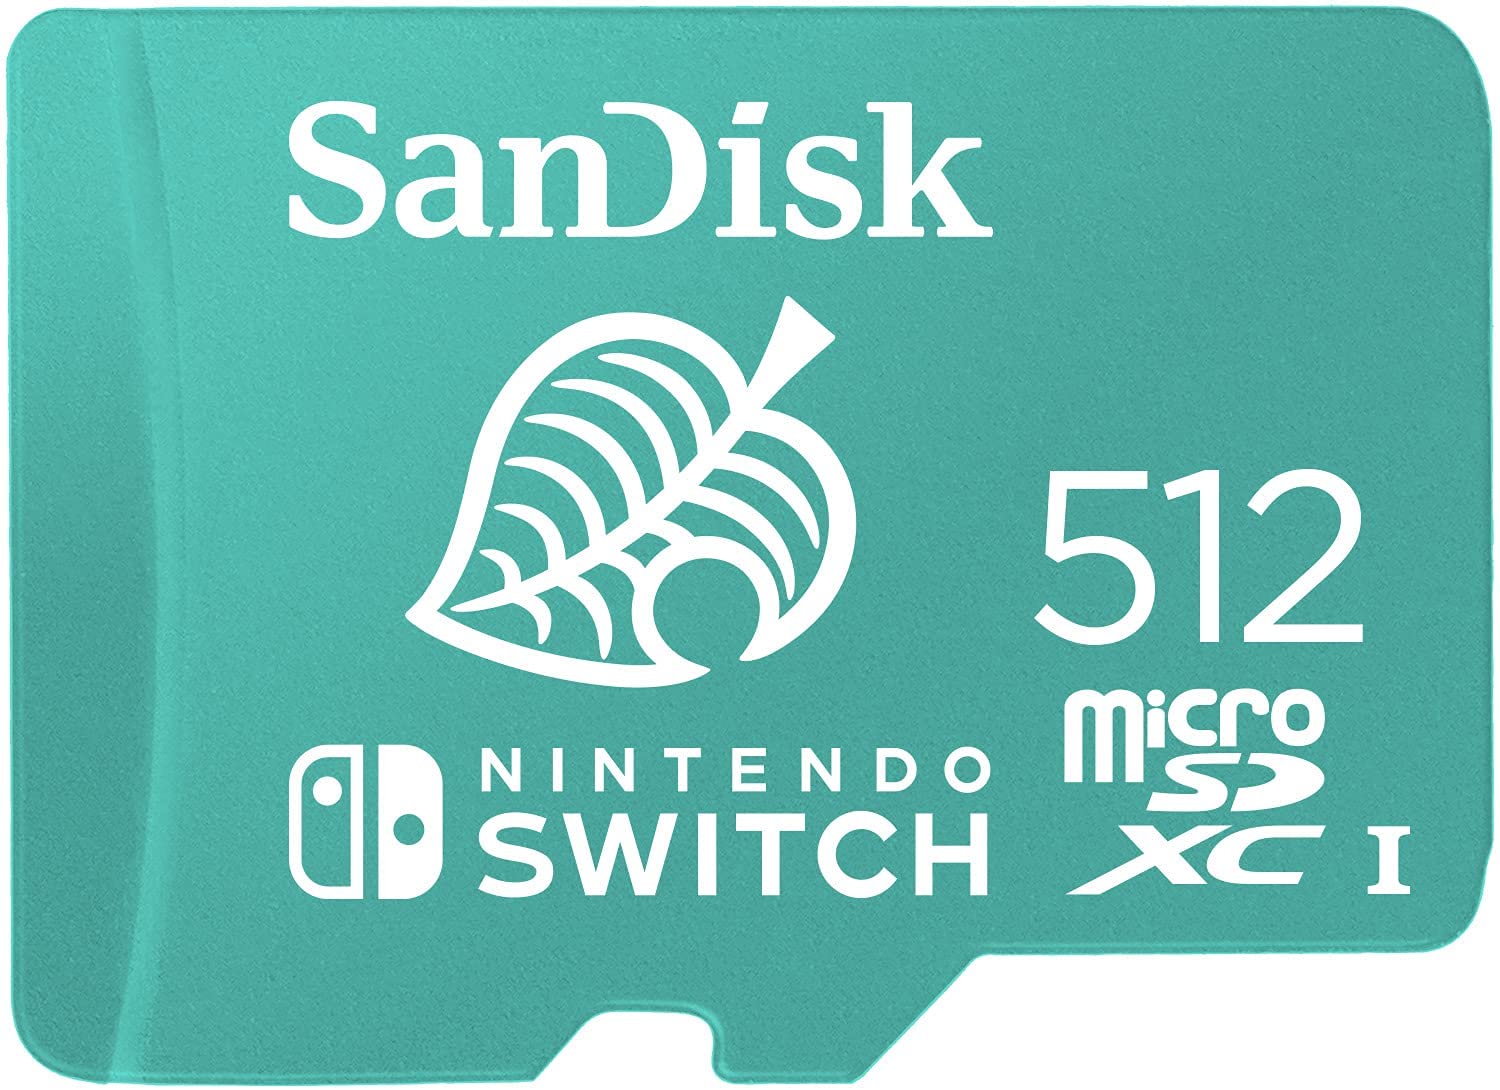 SanDisk microSD versione Animal Crossing: New Horizons